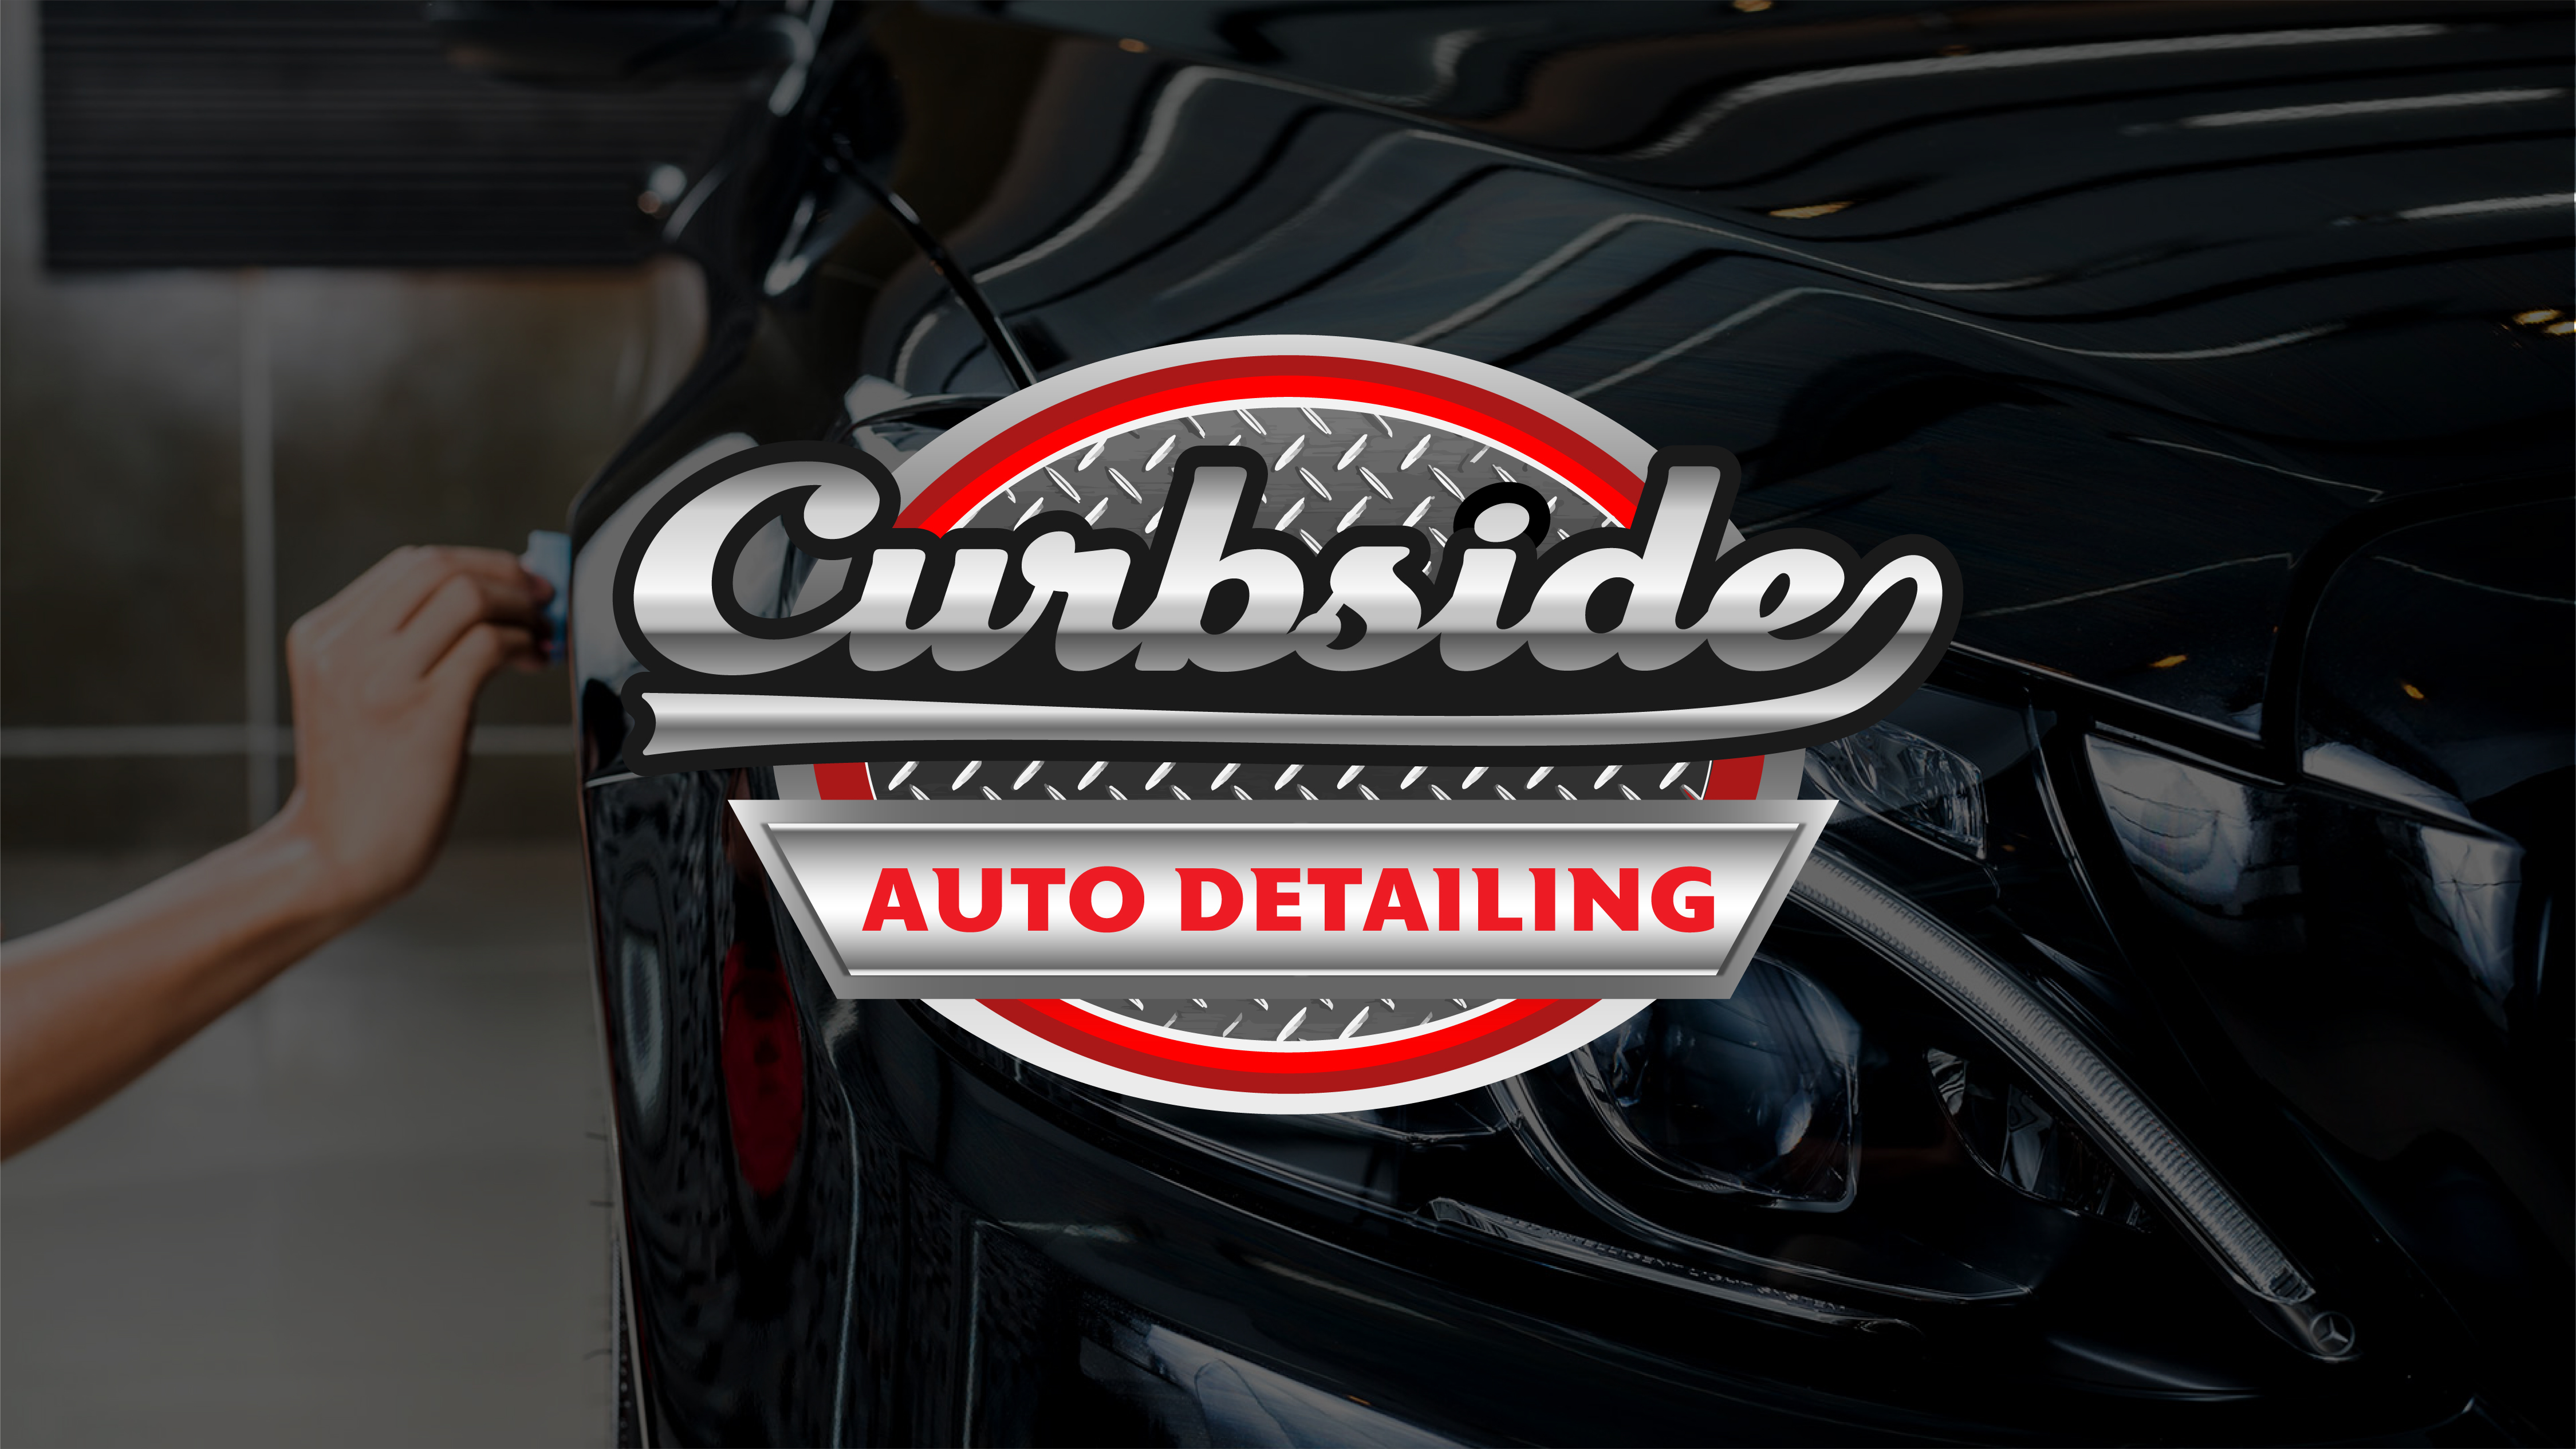 Curbside Auto Detailing logo.